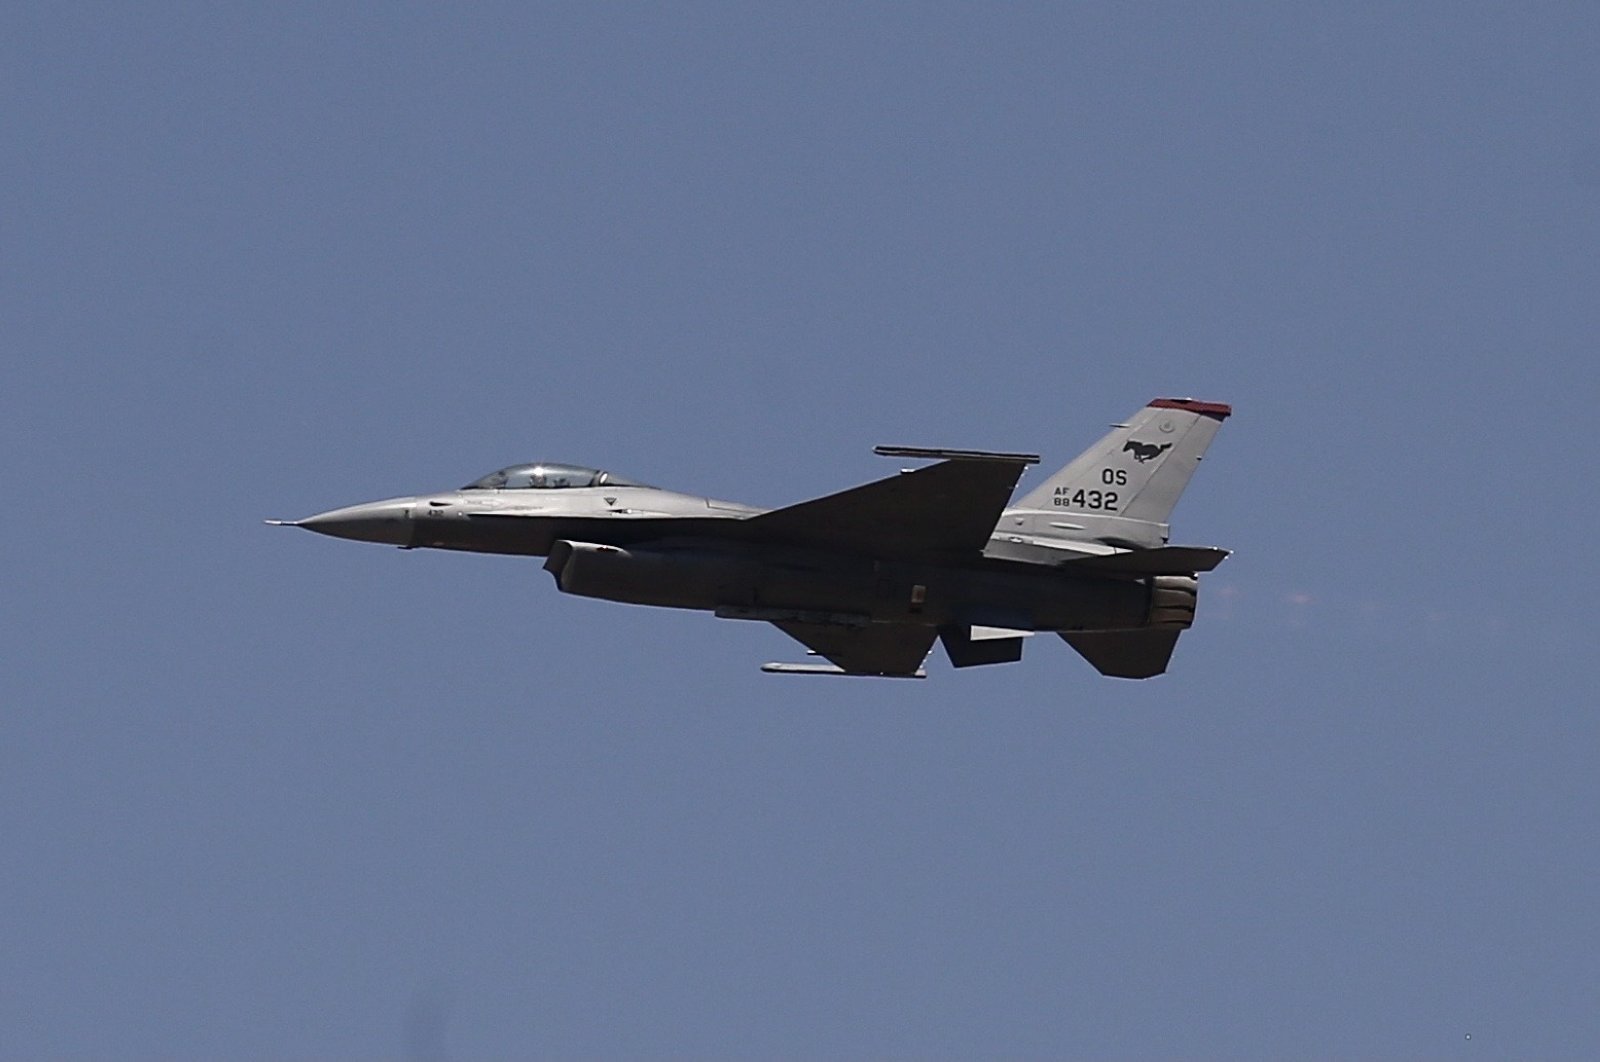 Türkiye bukan tanpa opsi pada jet tempur F-16: Kepala pertahanan